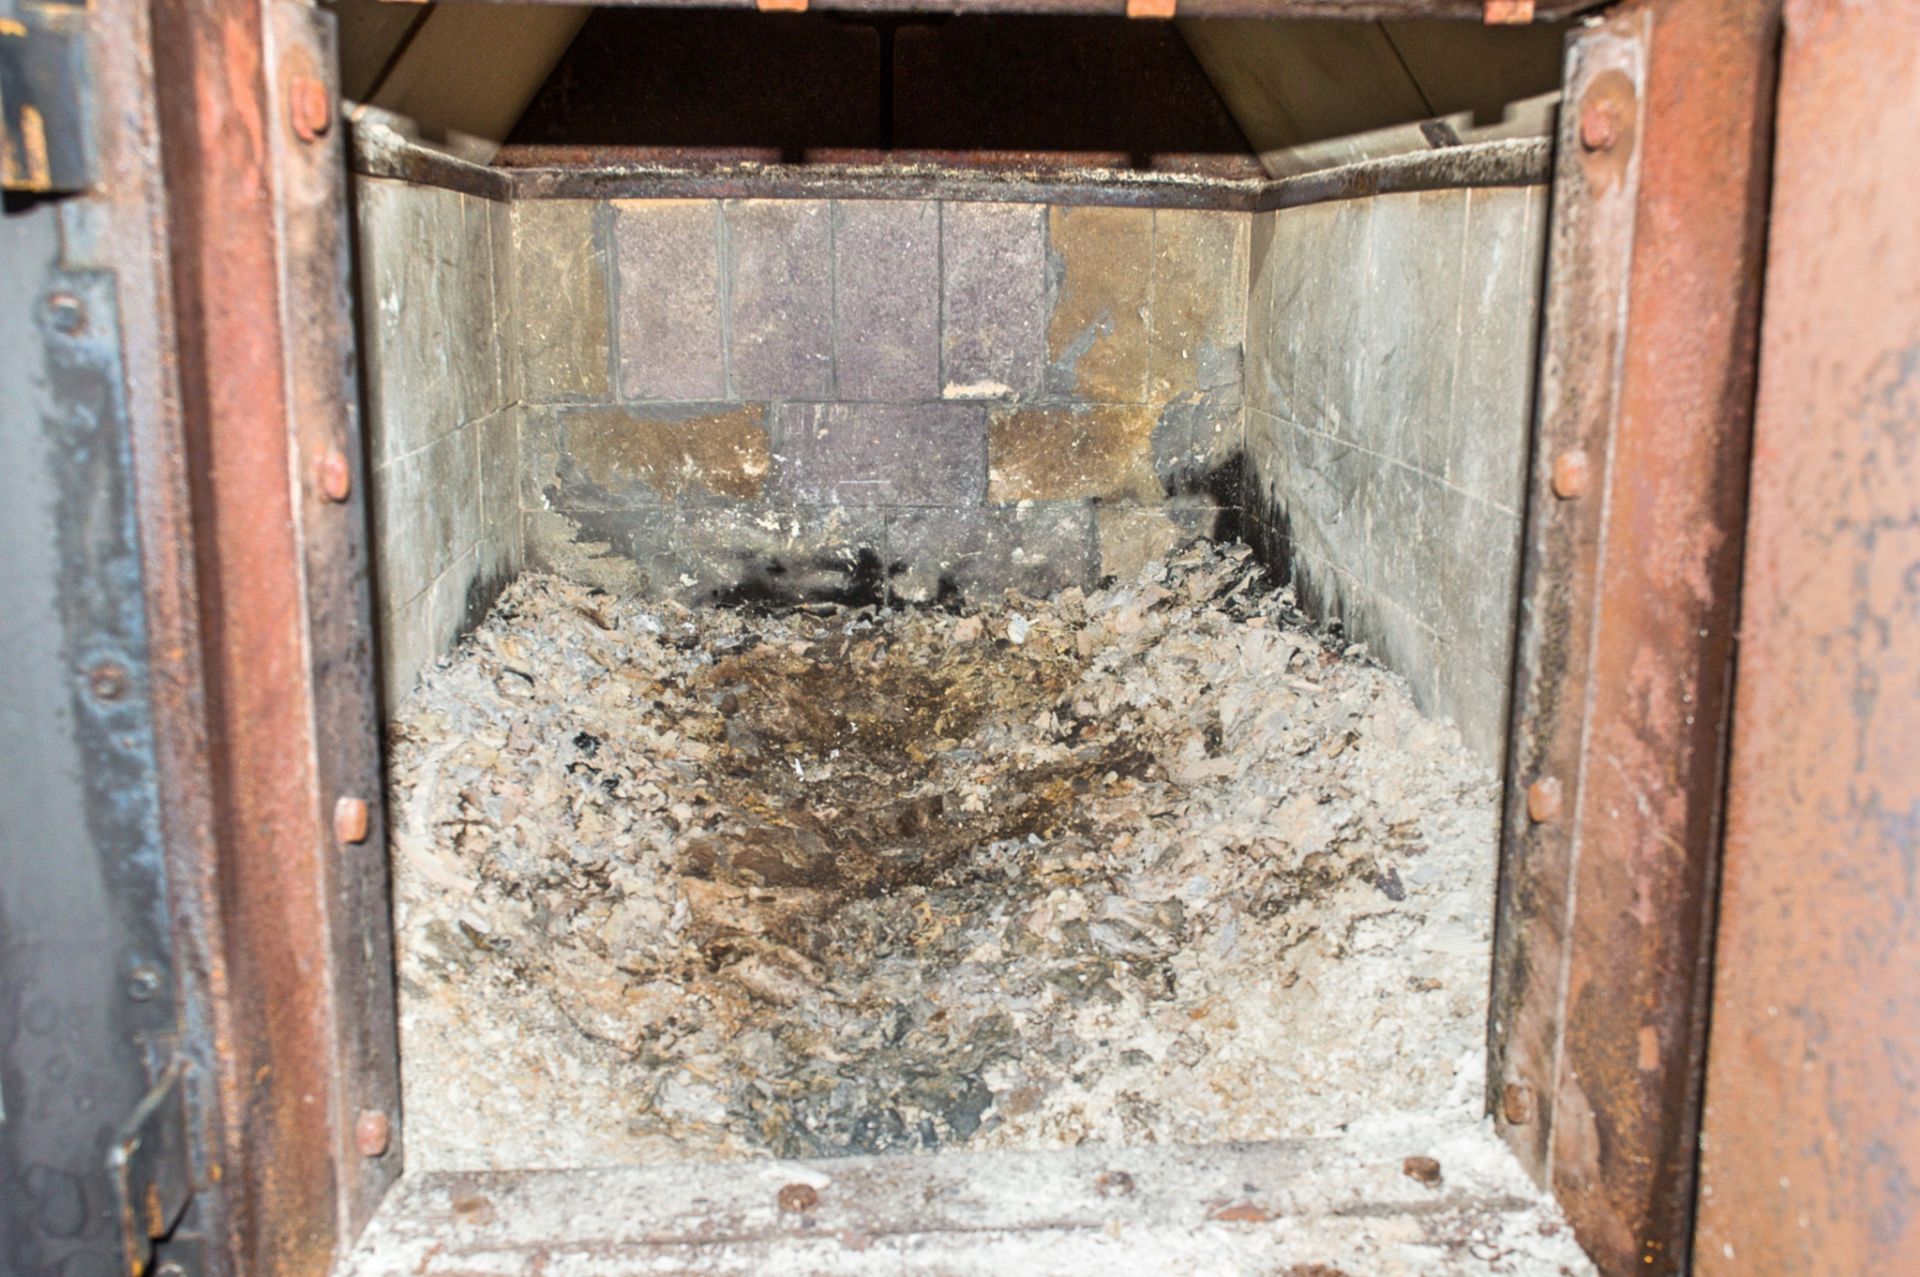 Wood Waste Technology wood burner heater - Image 4 of 5